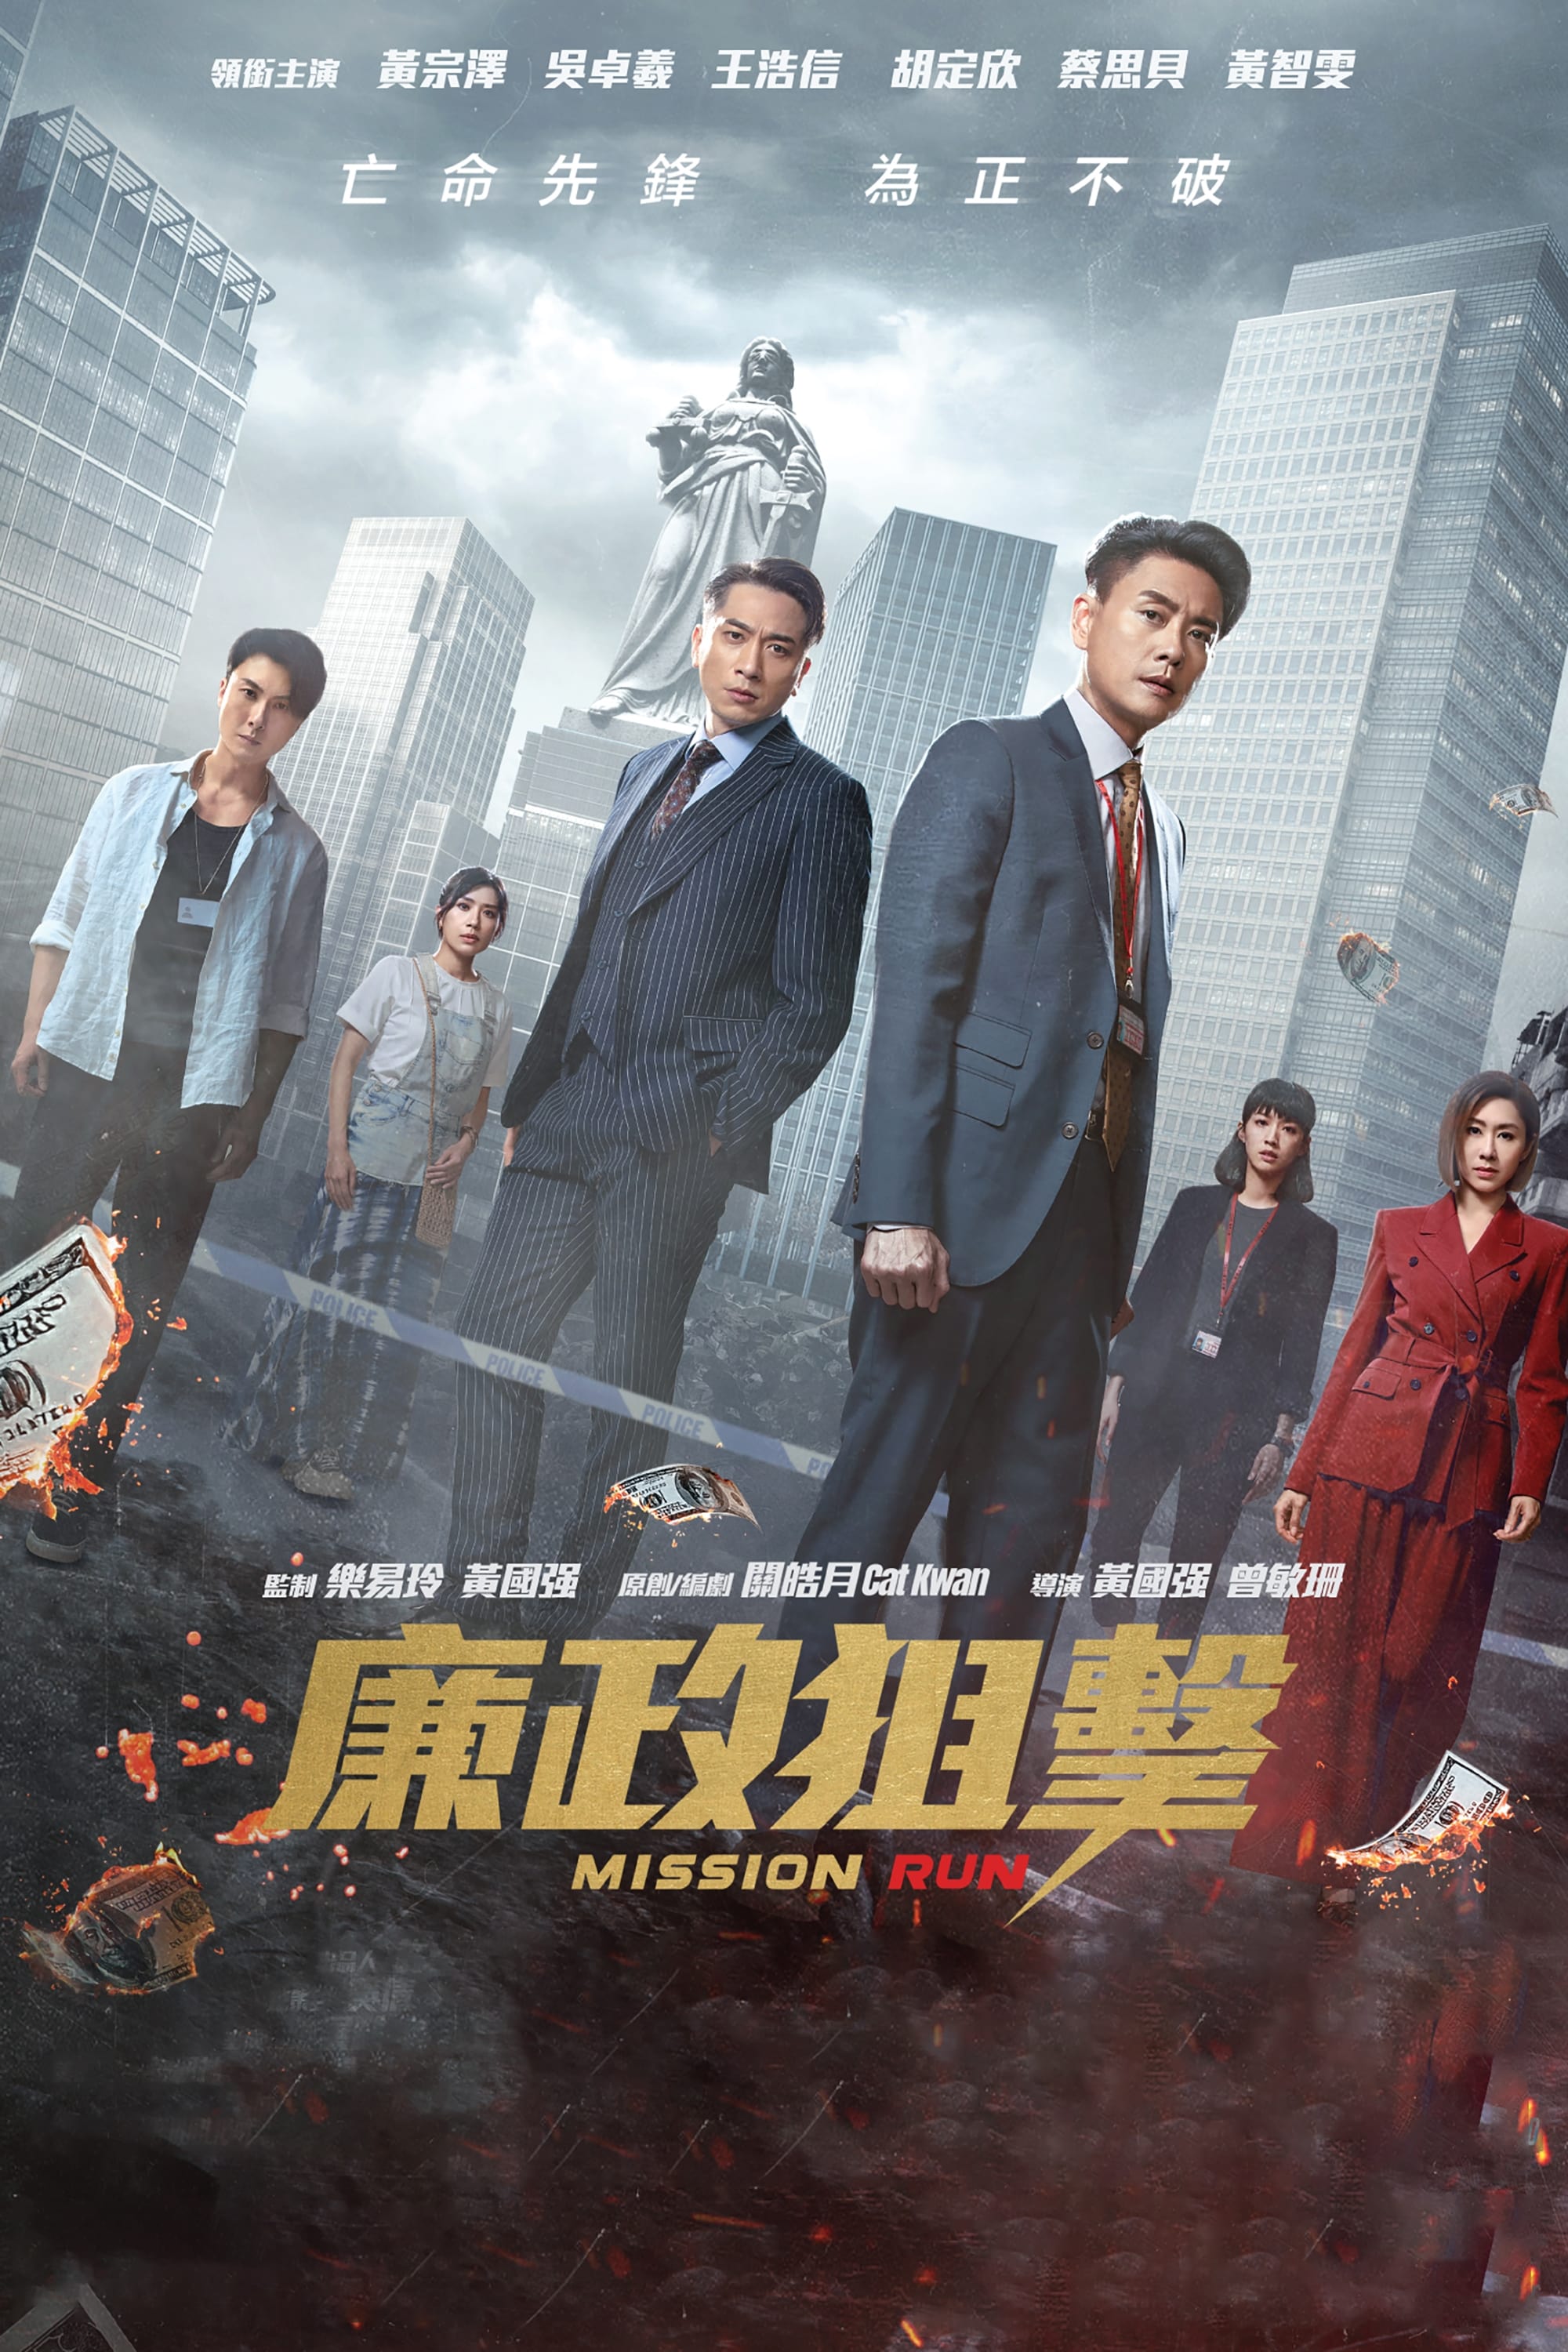 TV ratings for Mission Run (廉政狙擊) in Russia. TVB Jade TV series